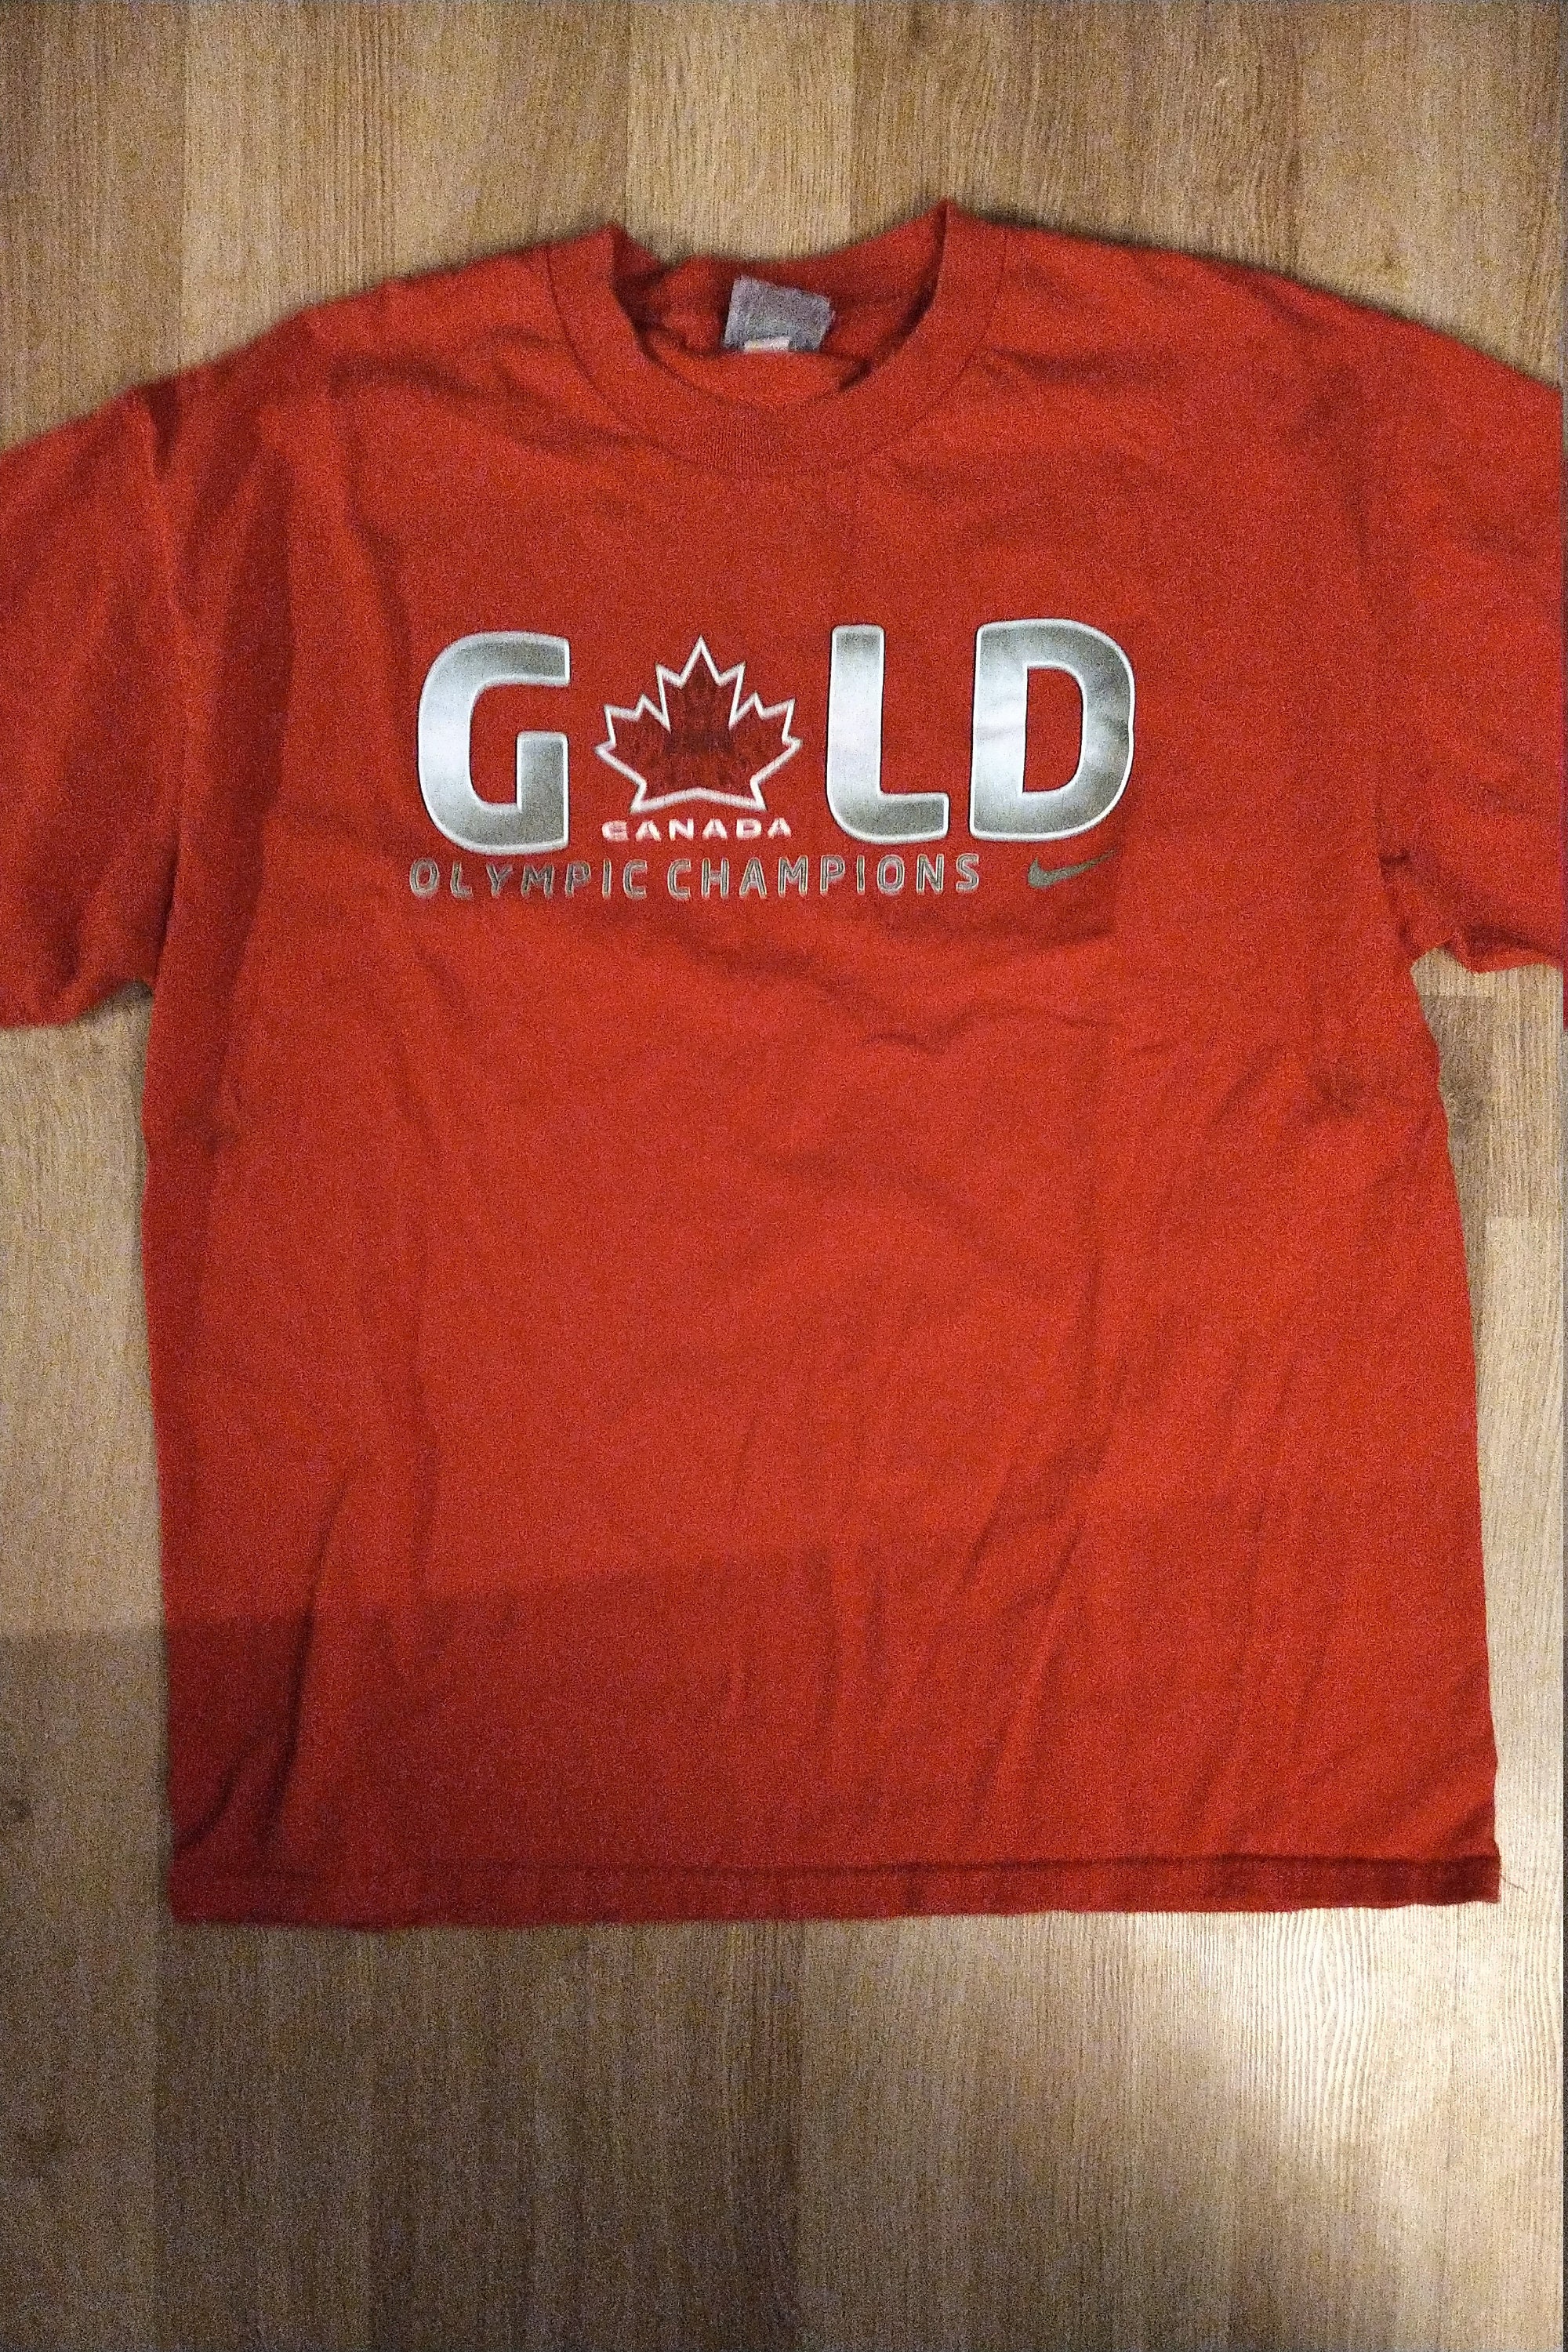 2010 olympic hockey jerseys for sale